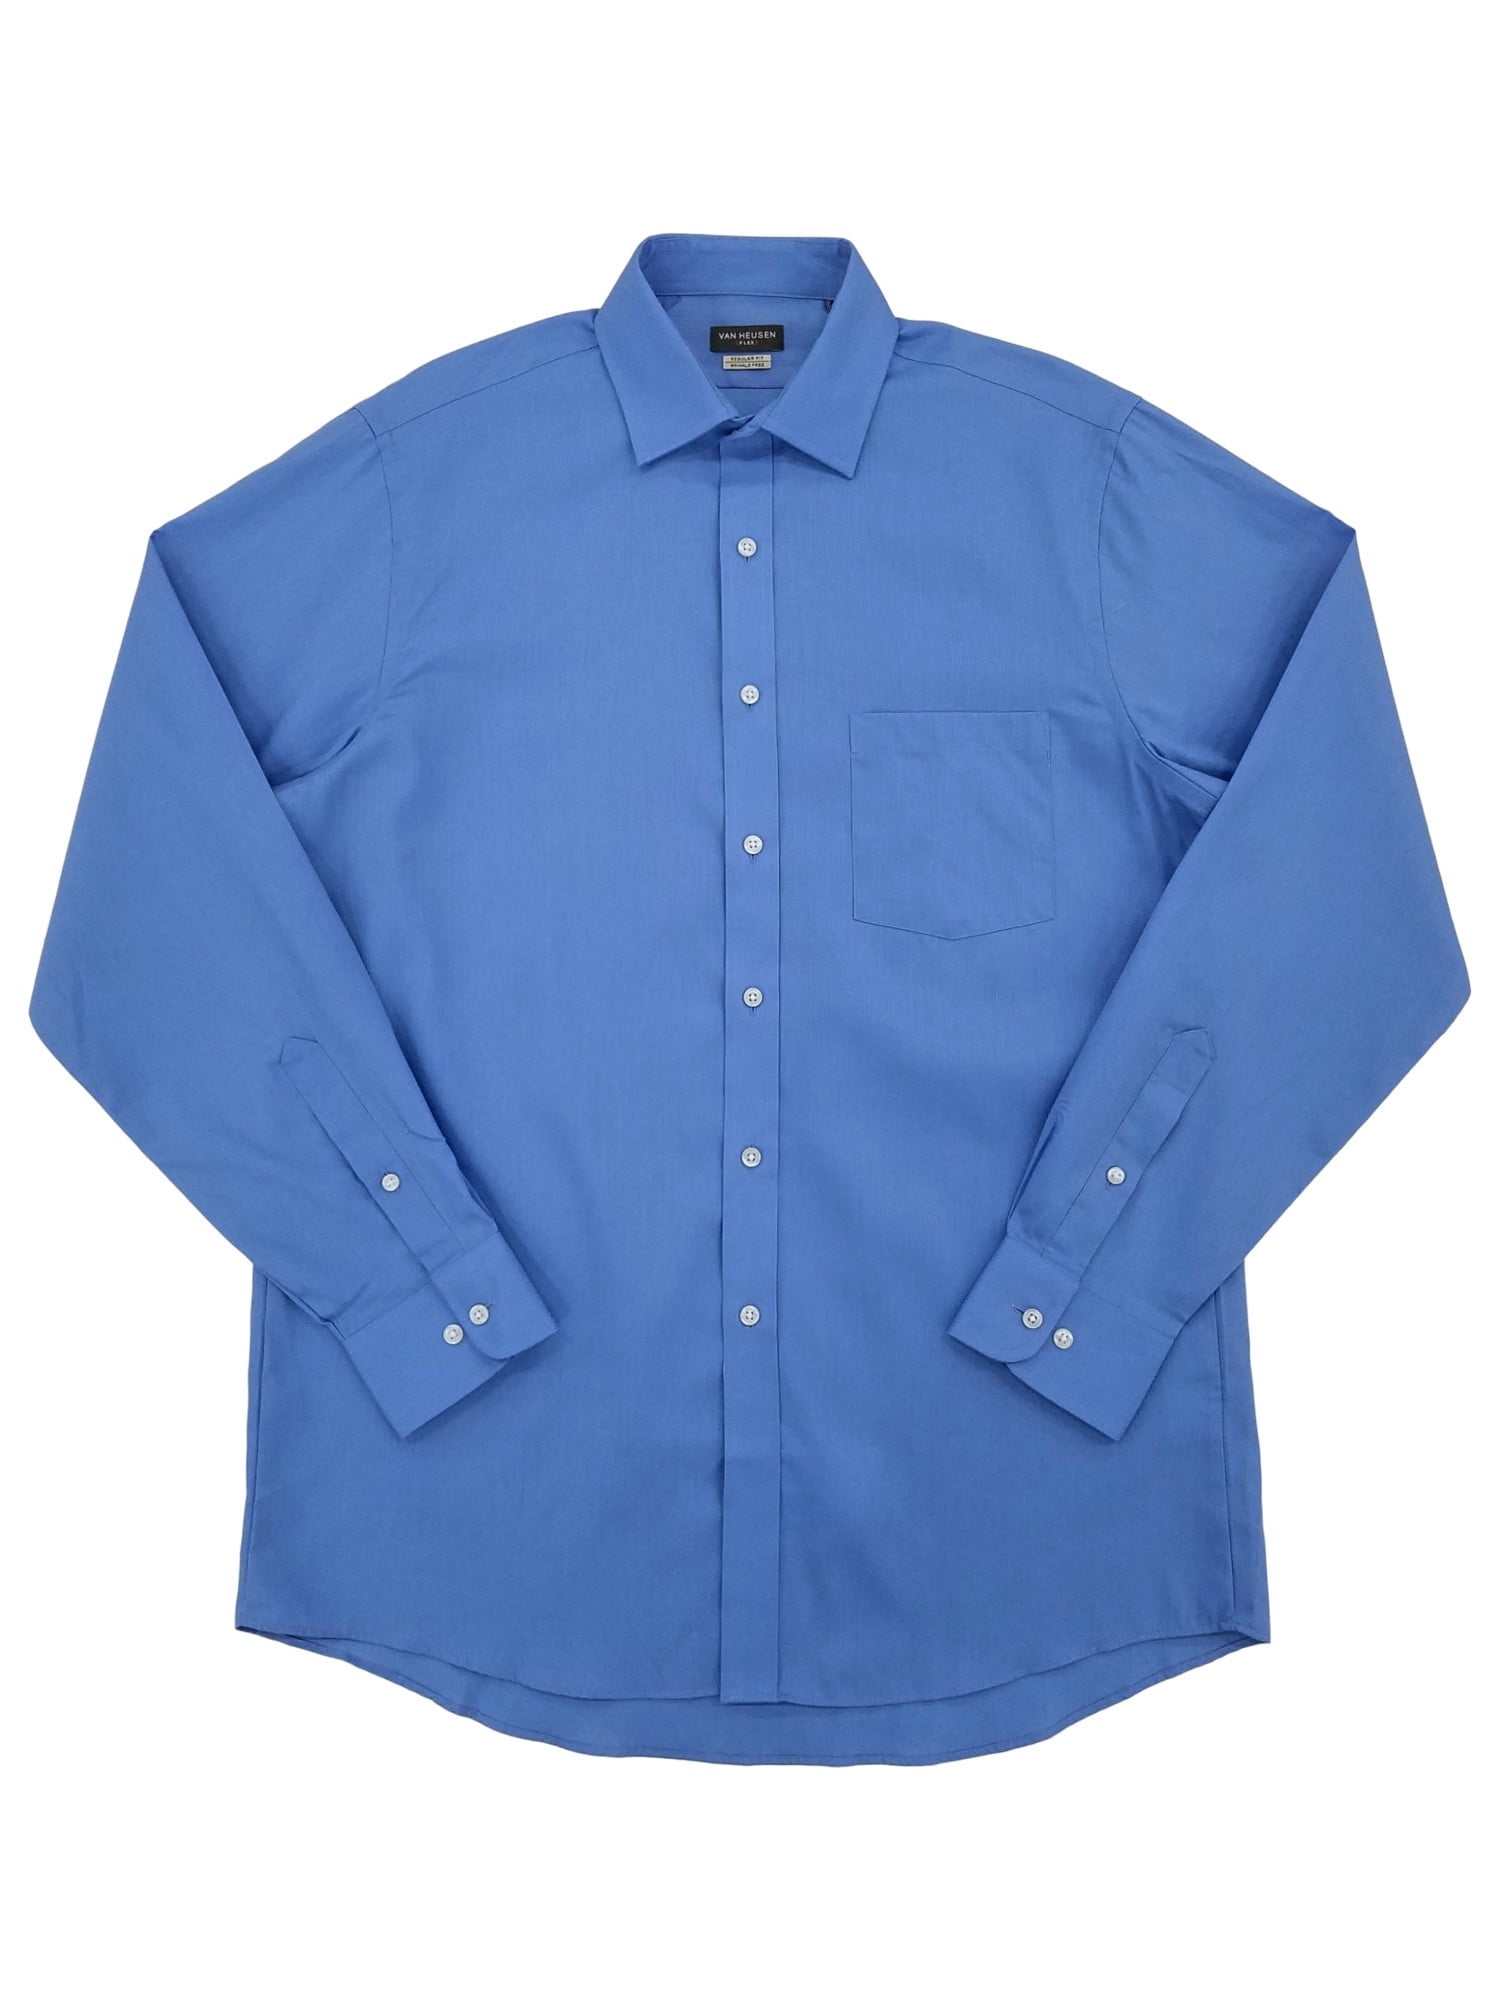 Van Heusen Mens Regular Fit Flex Collar Dress Shirt MIdnight 15.5 32/33 